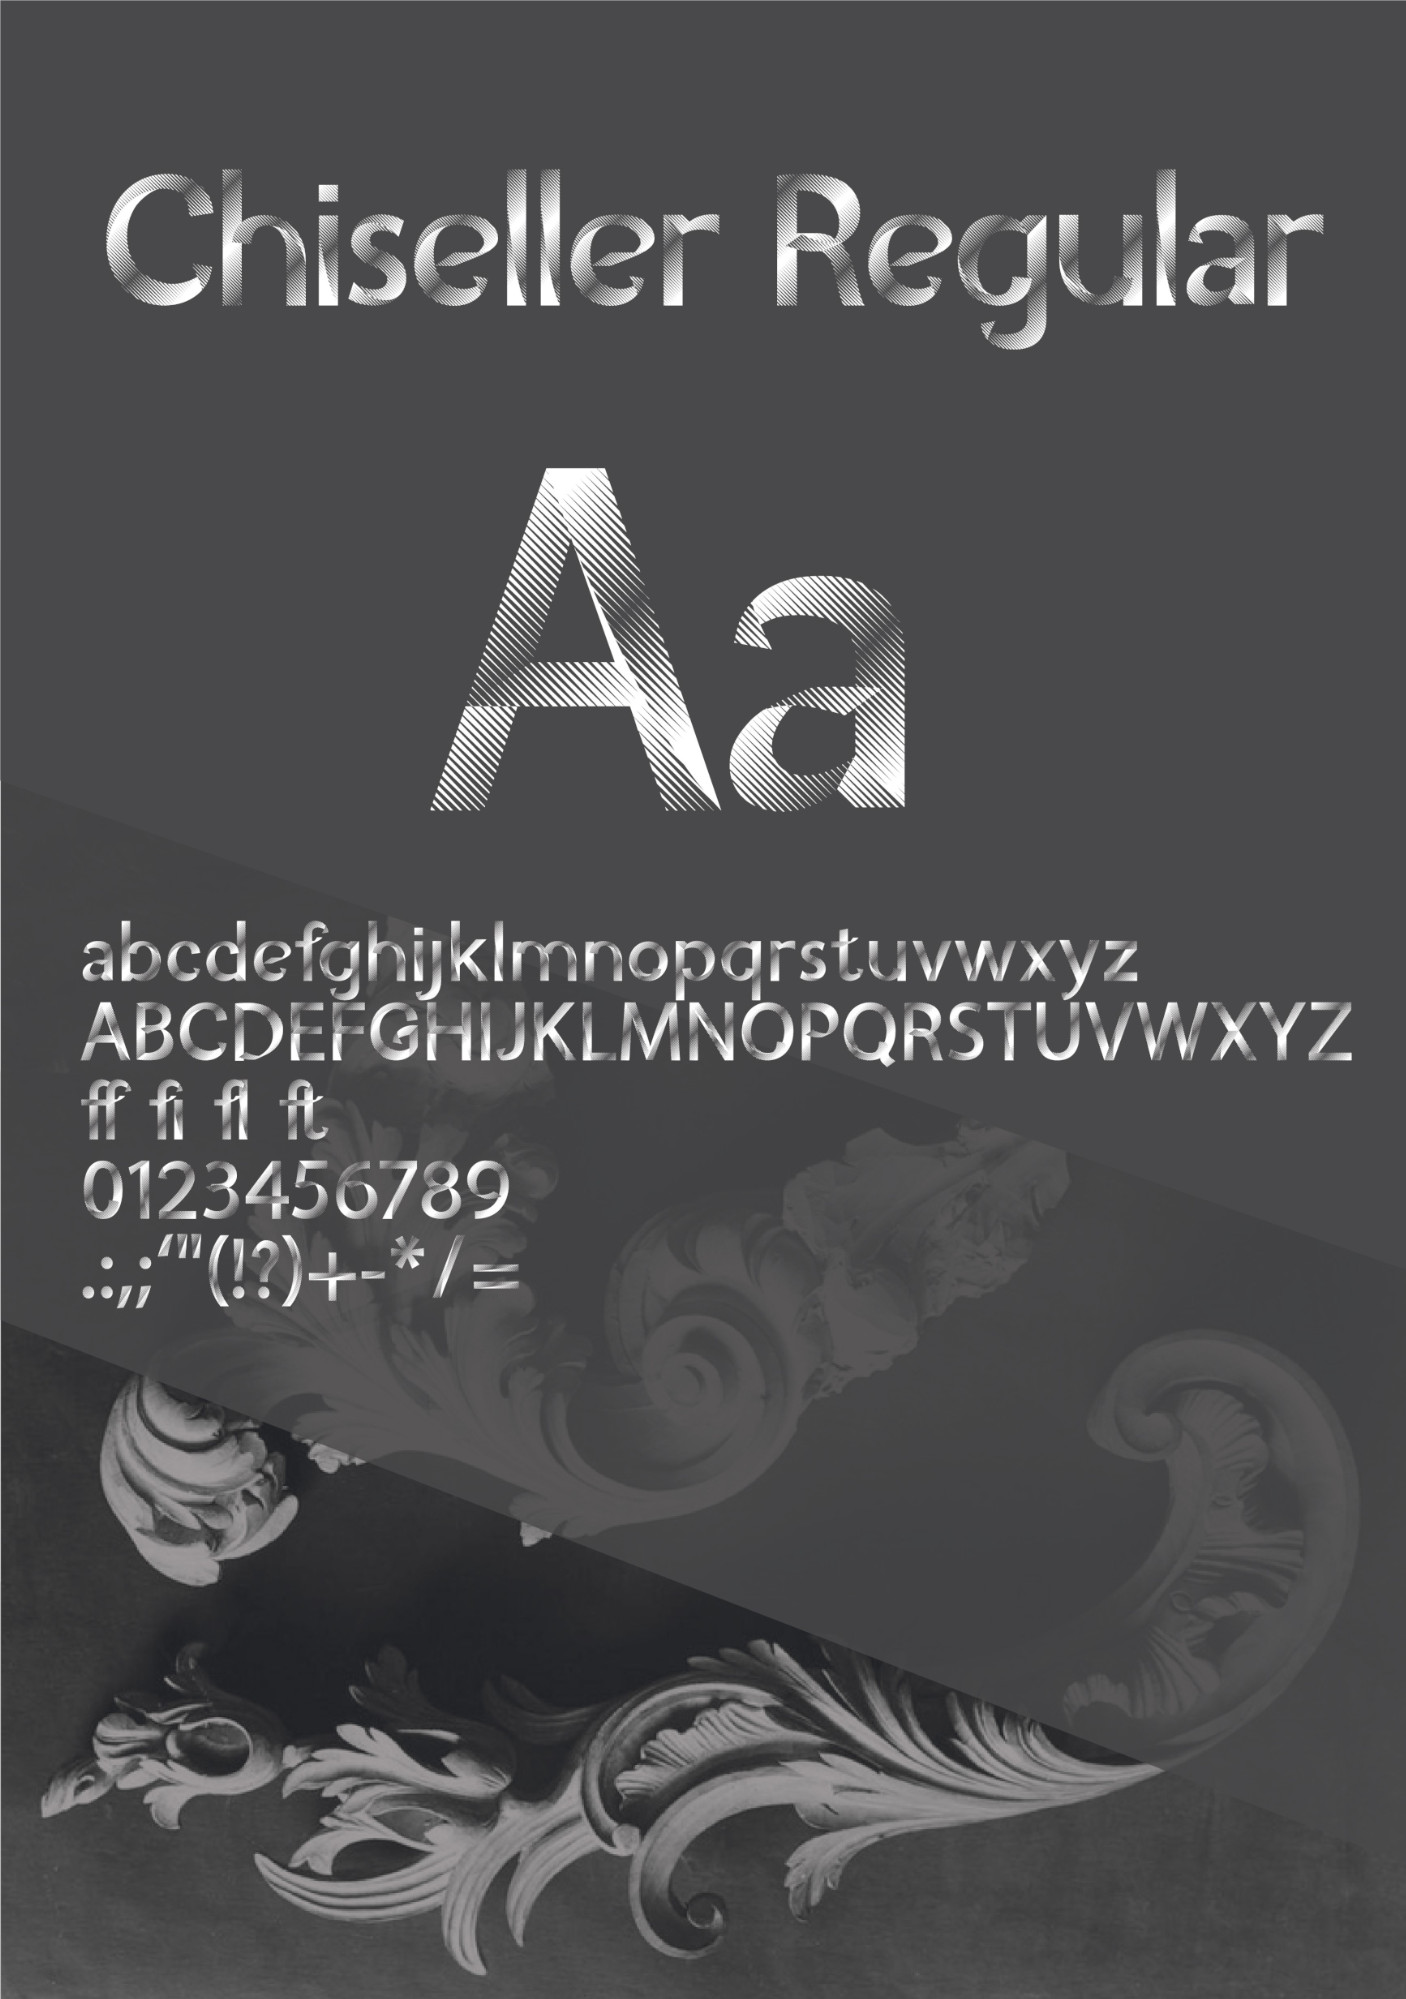 Chiseller Regular display typeface